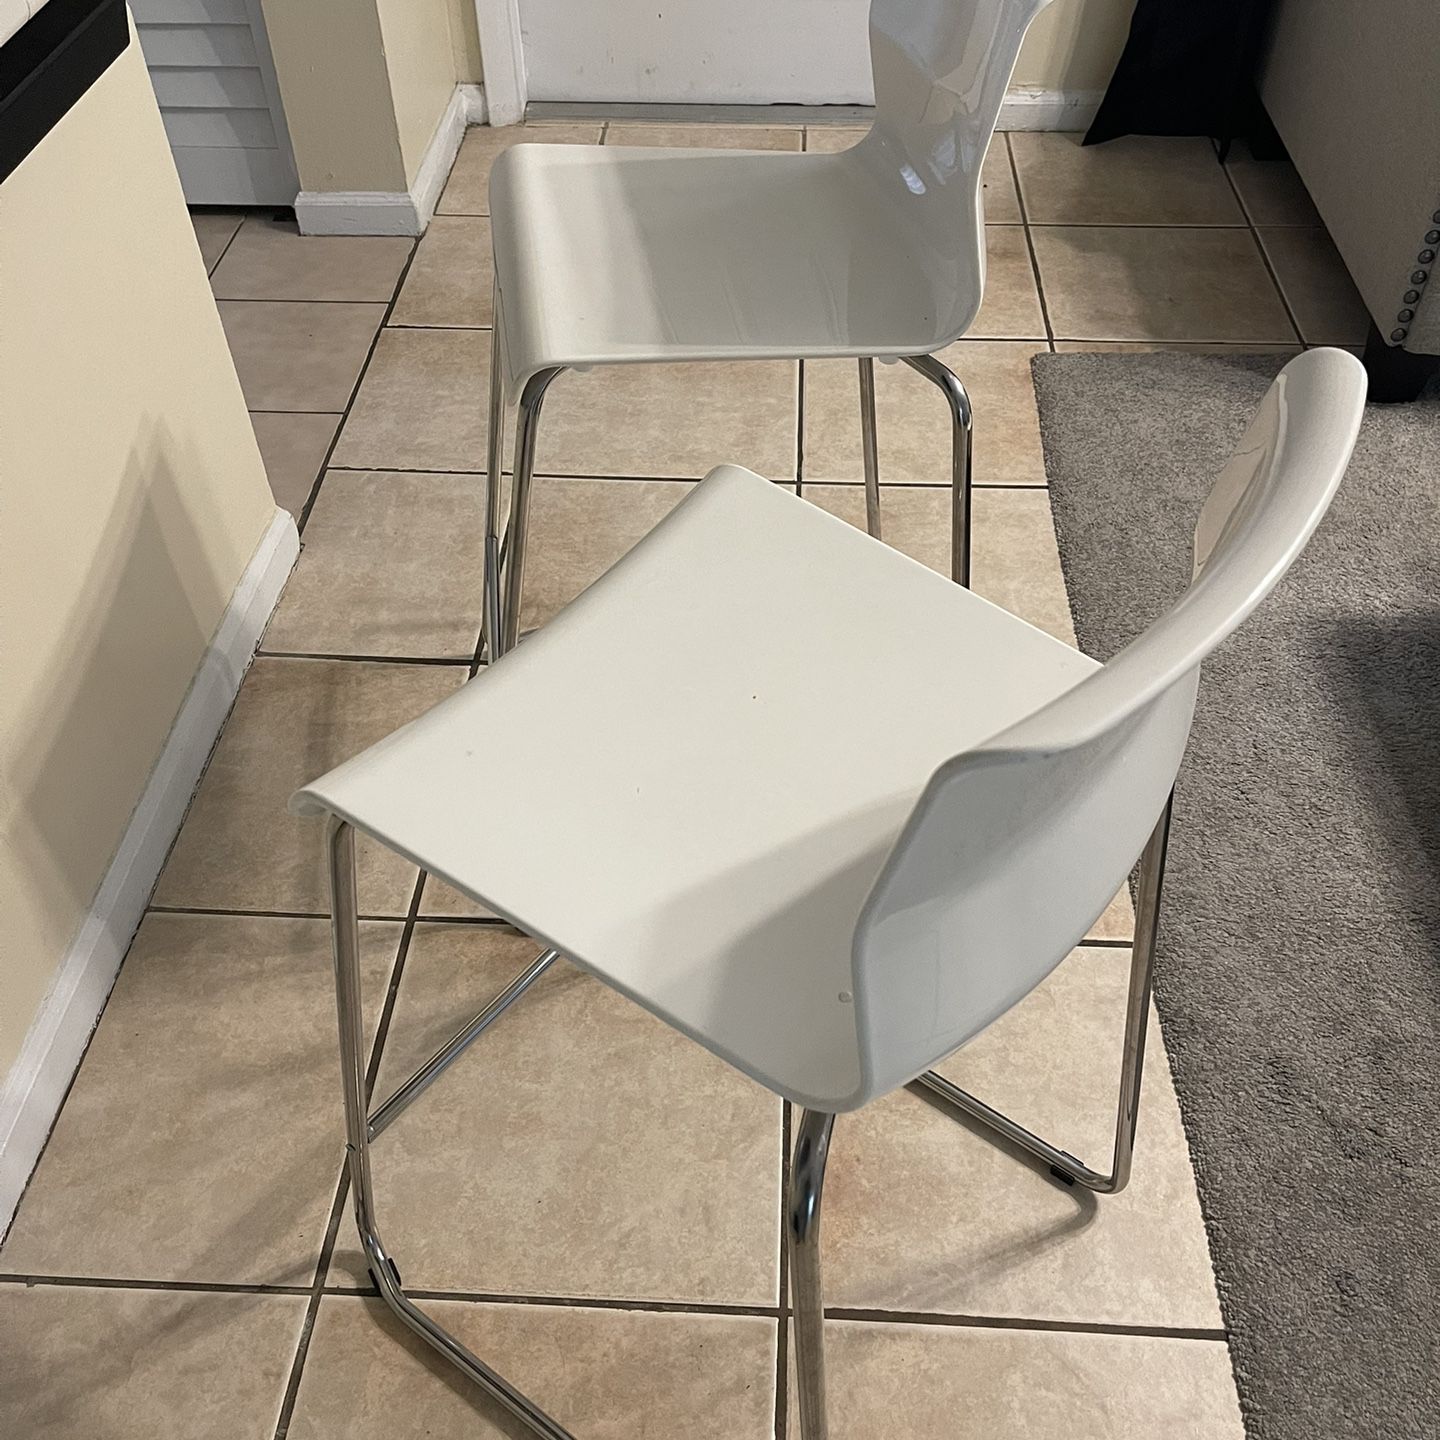 Bar stool, white/chrome plated, 26 "